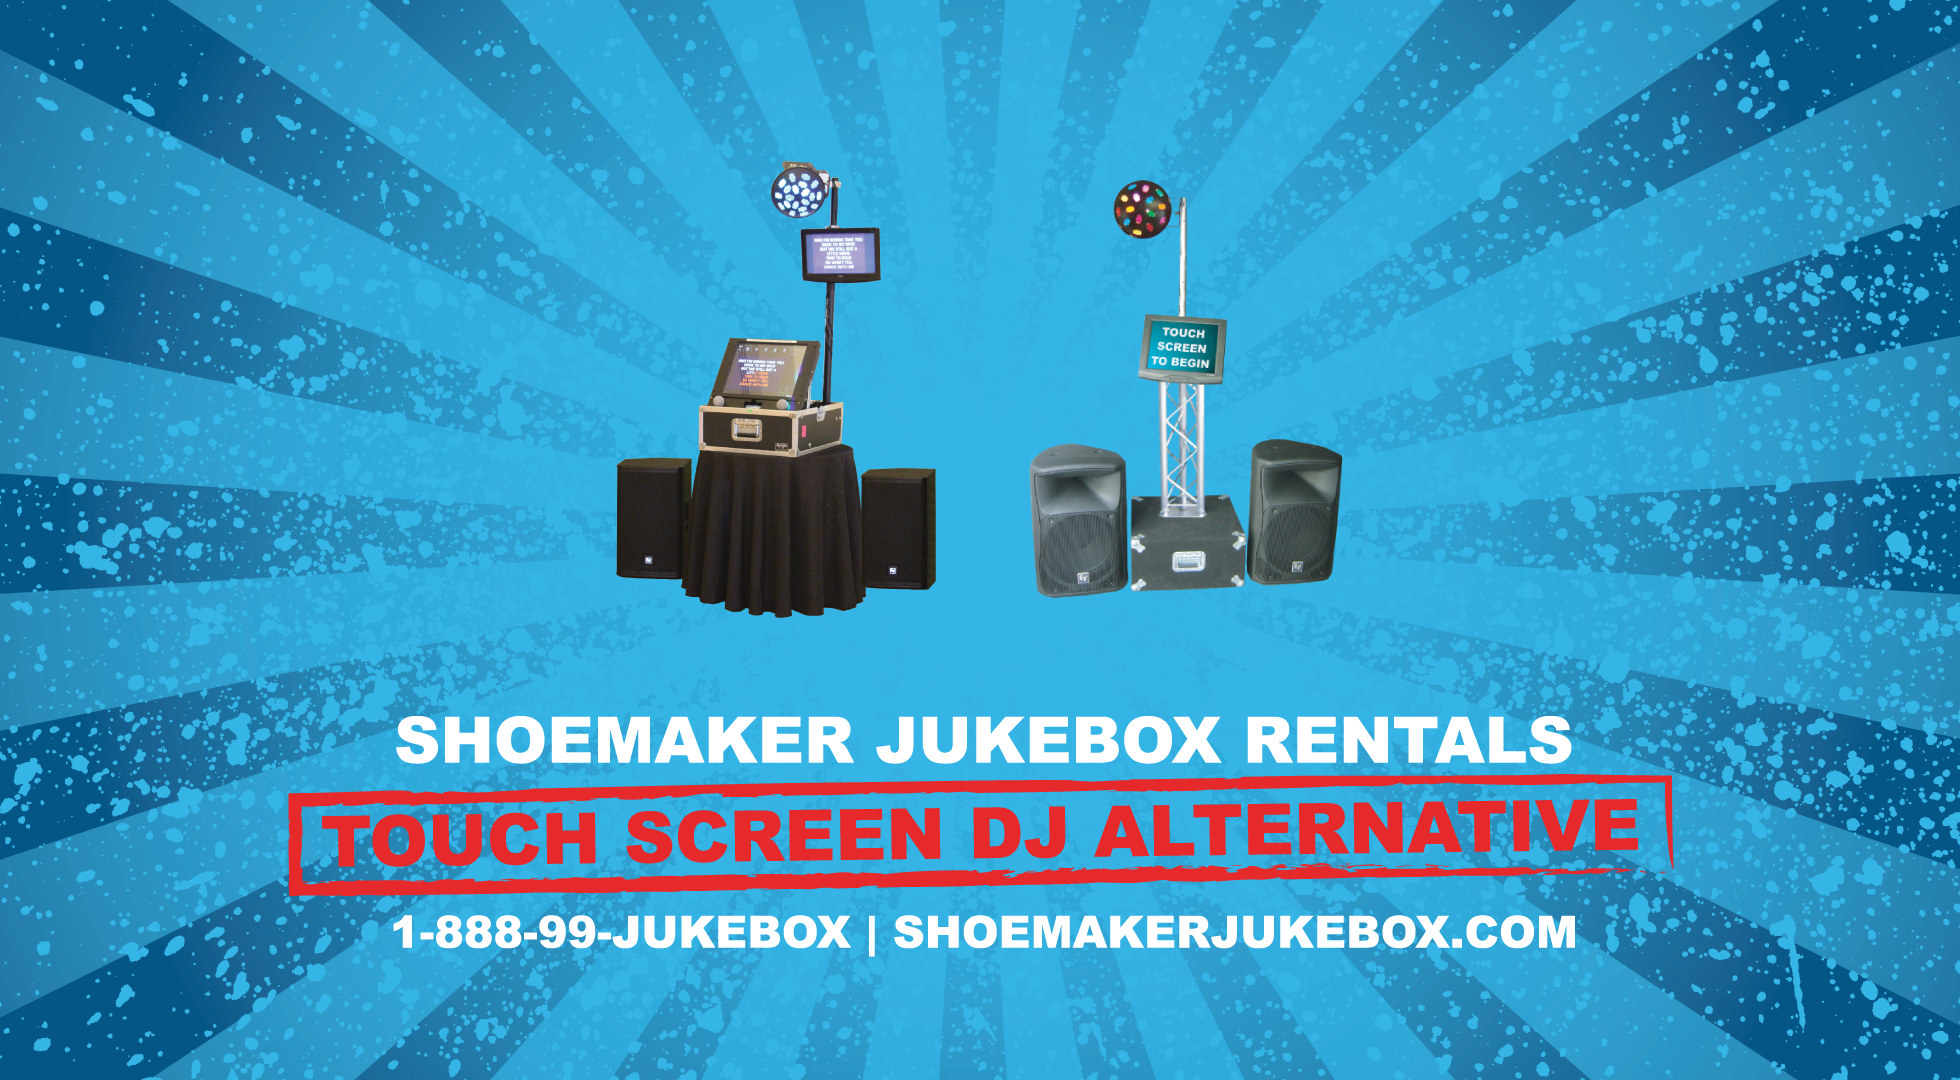 Jukebox Song List - DJ Entertainment